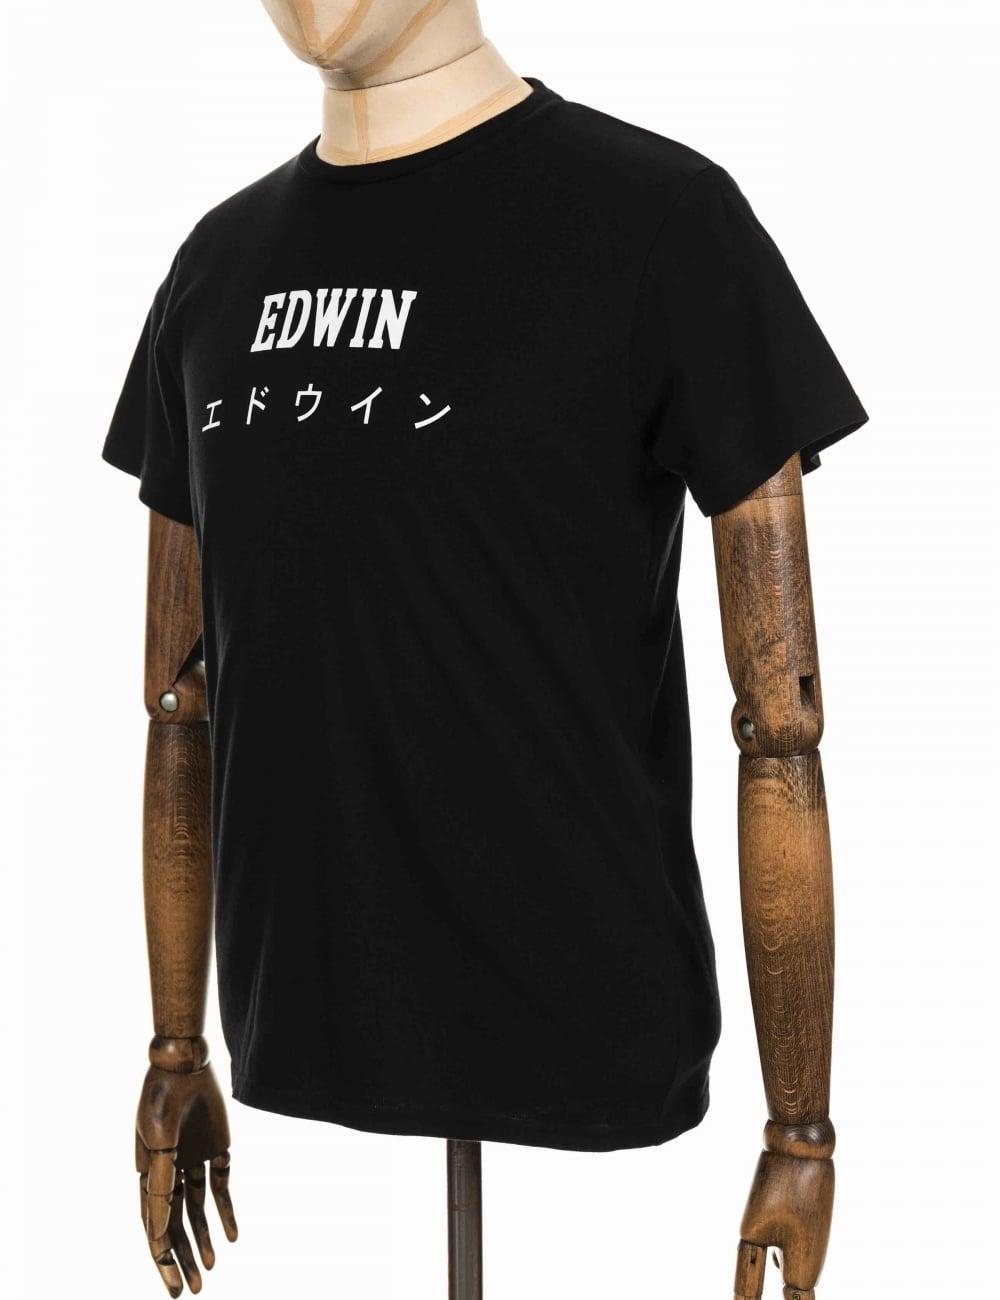 Edwin Logo - Edwin Jeans Japan Logo Tee - Black - Clothing from Fat Buddha Store UK